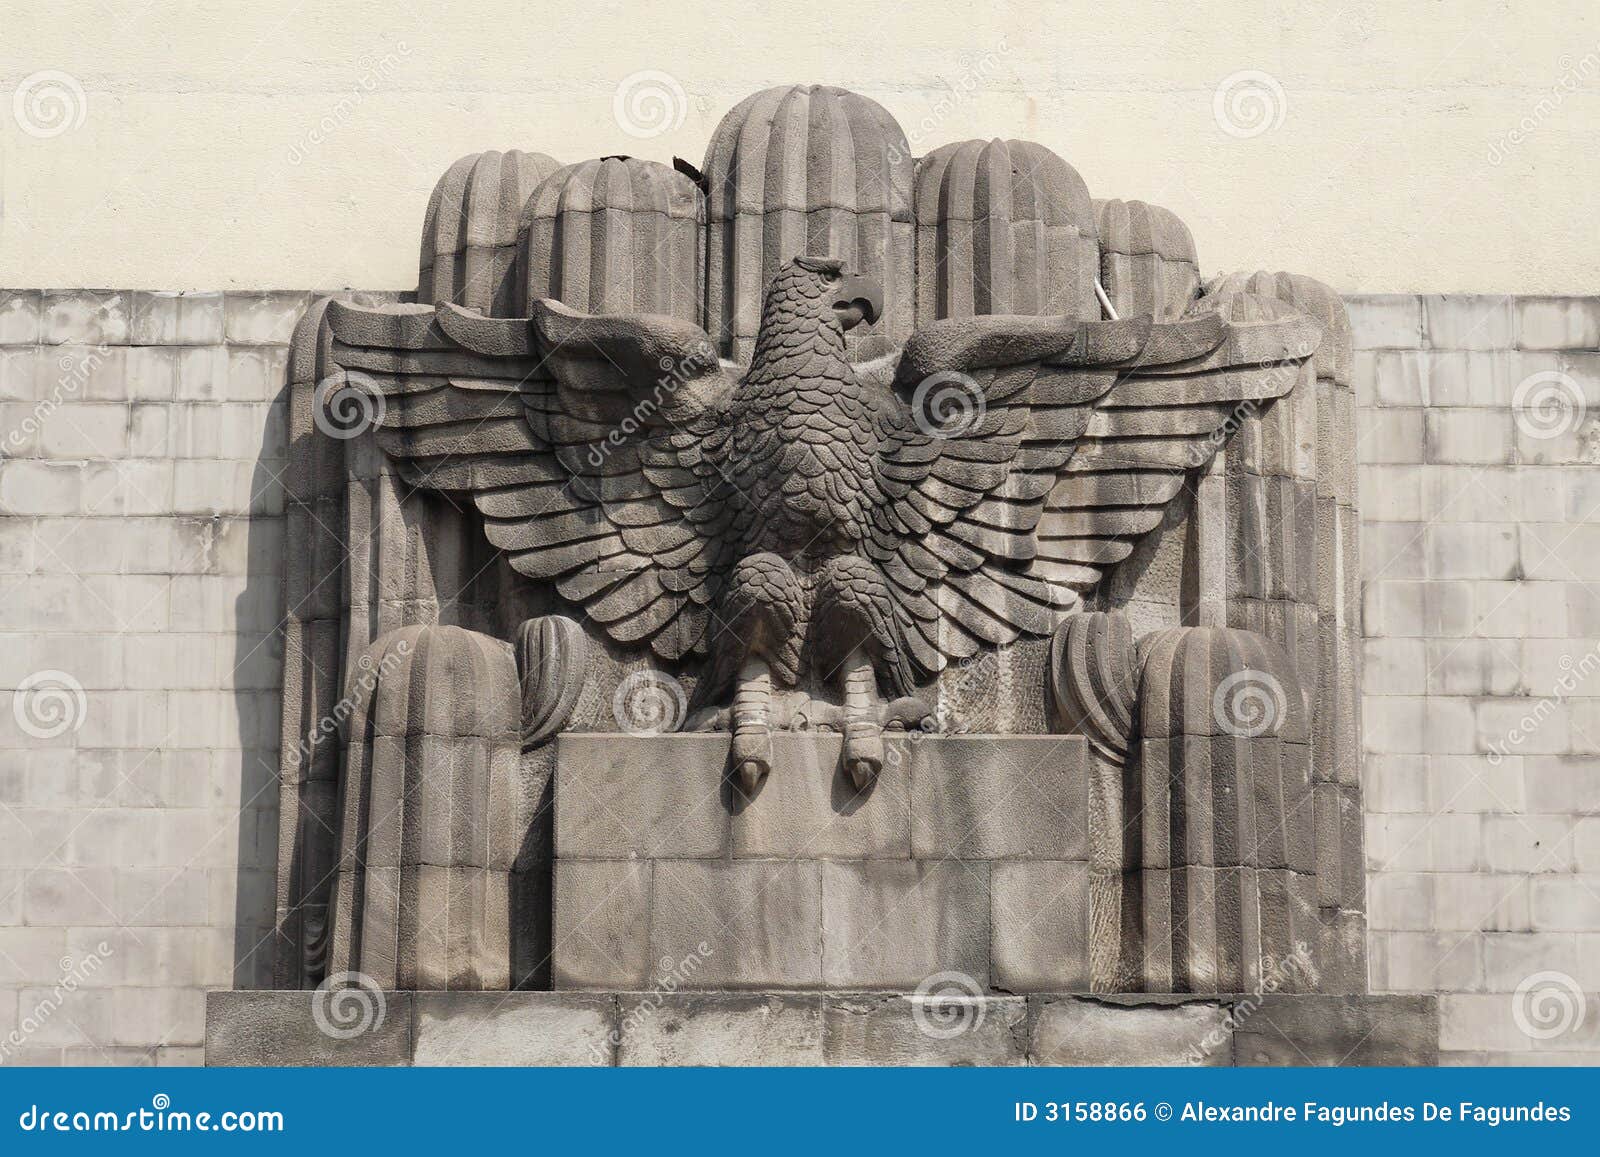 alvaro obregon monument mexico city